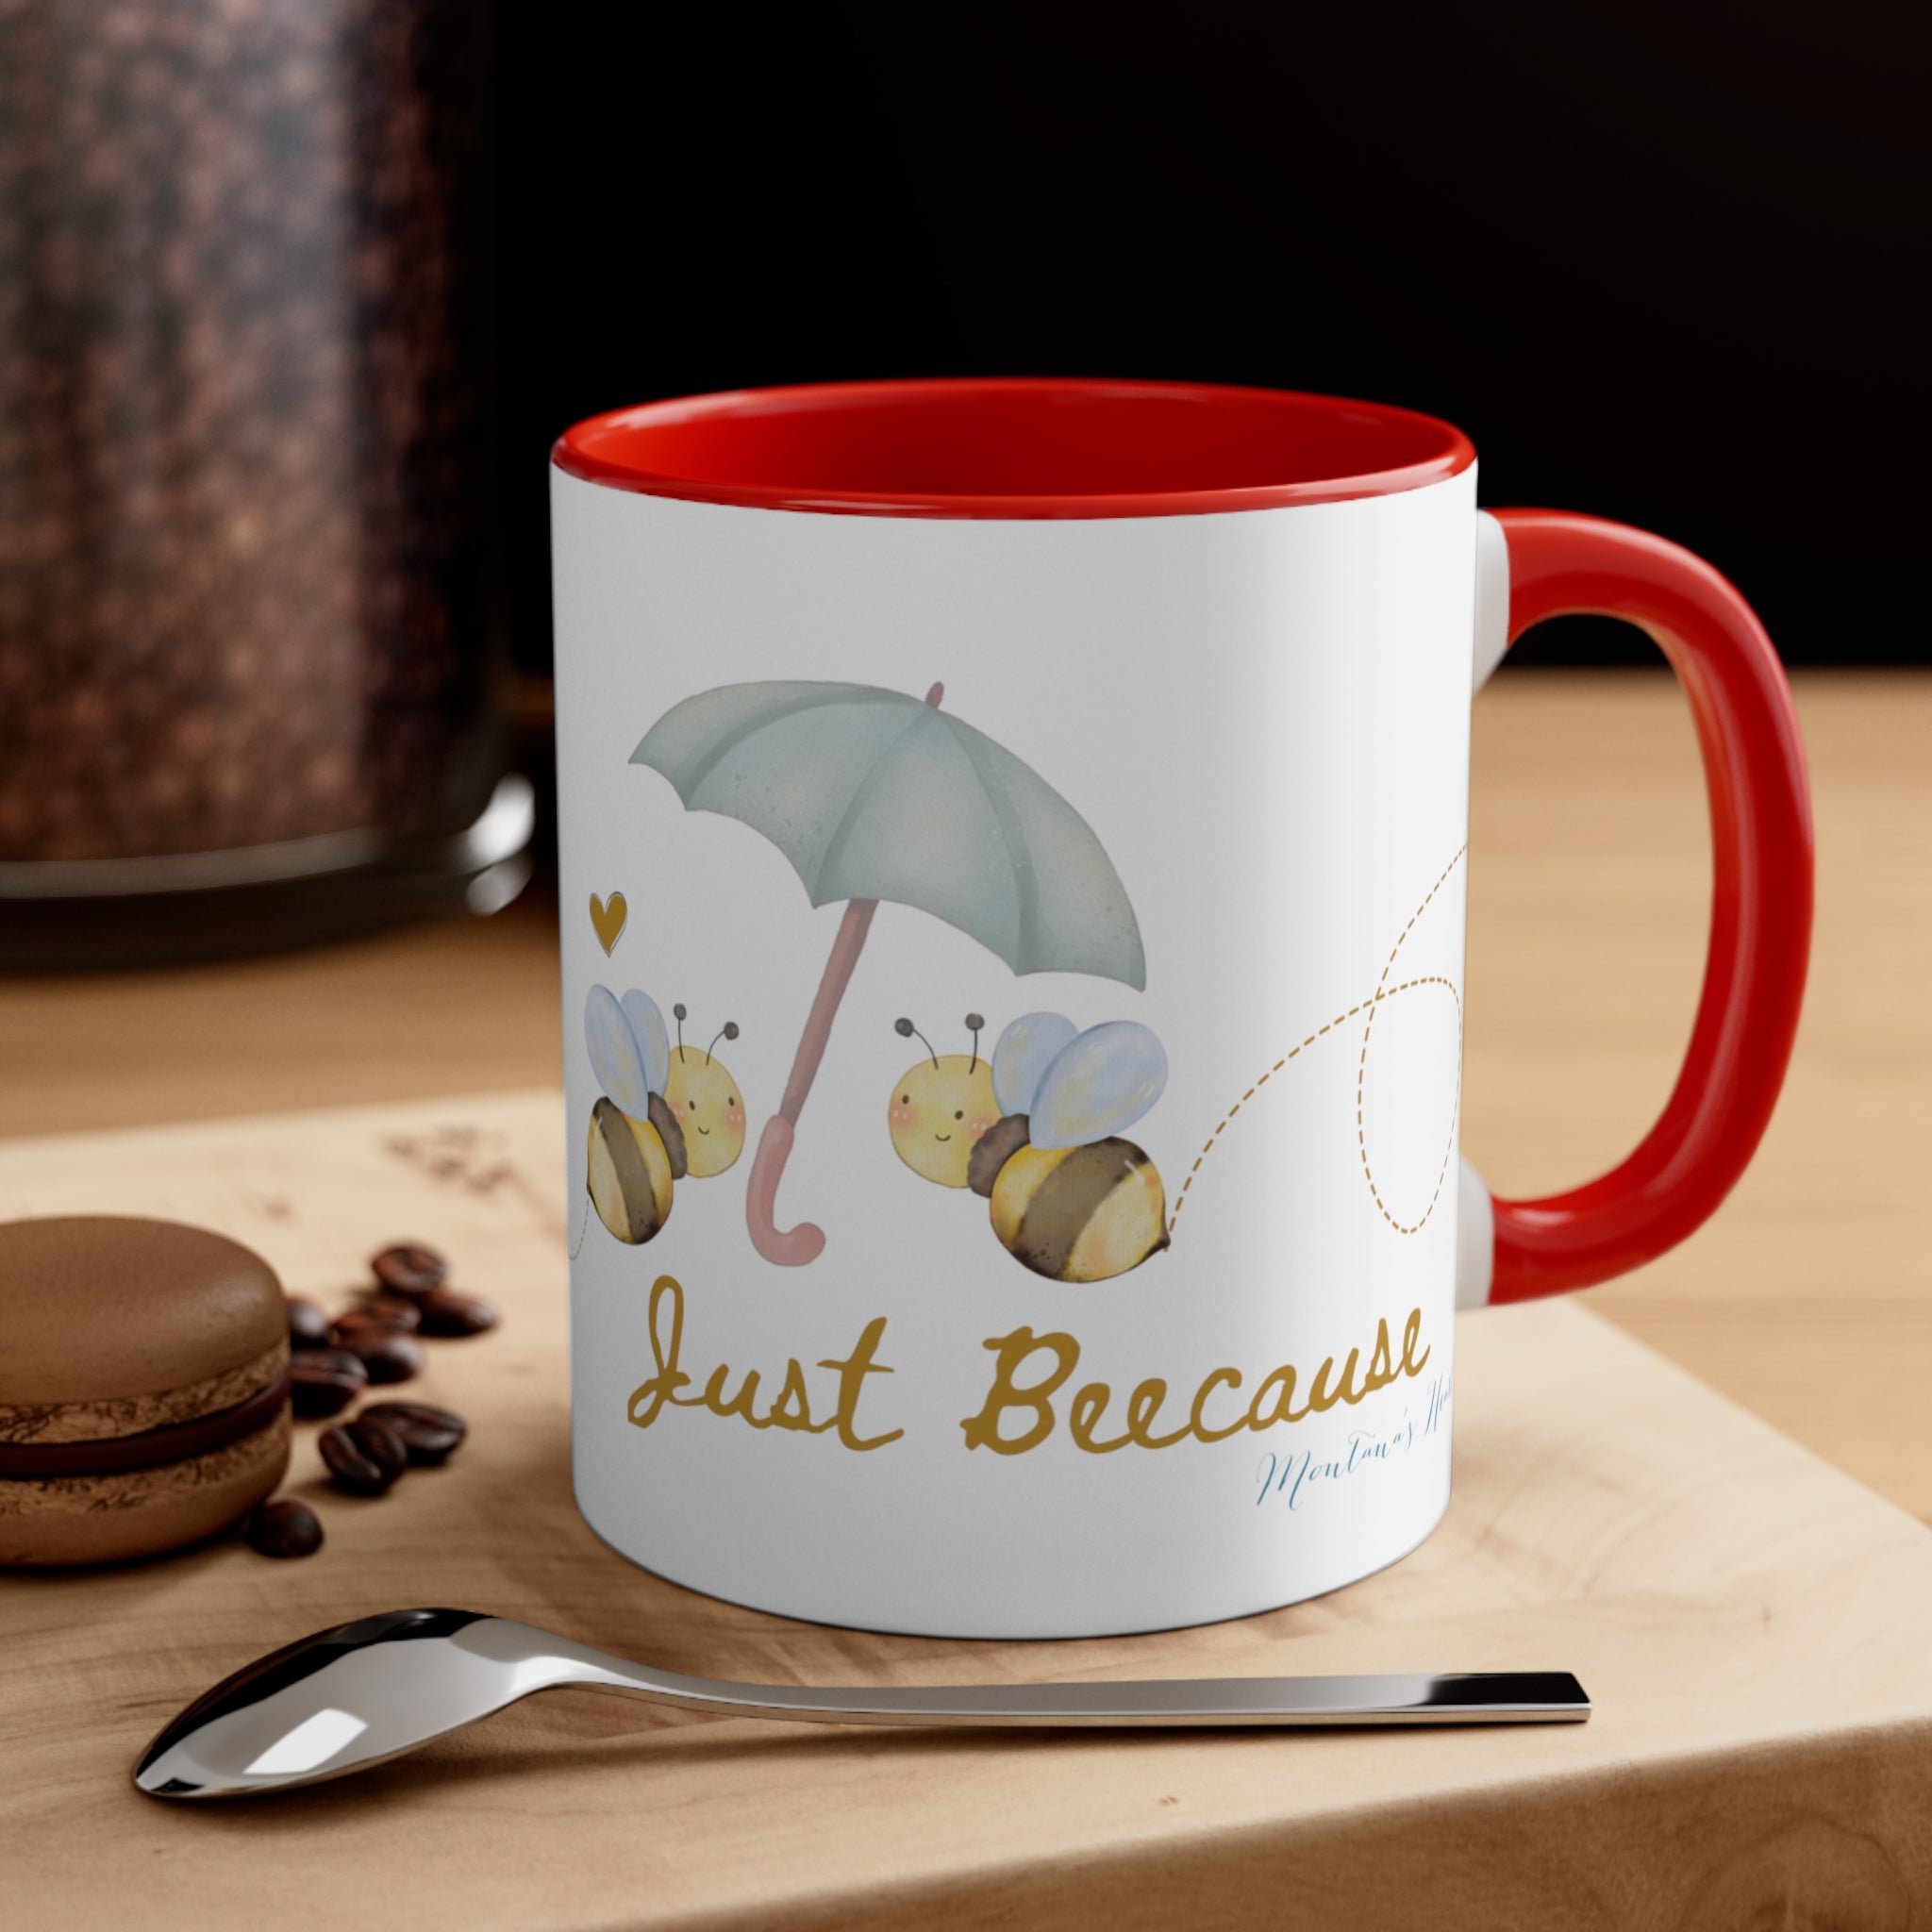 Just Beecause bumblebee mug, Accent Coffee Mug, 11oz